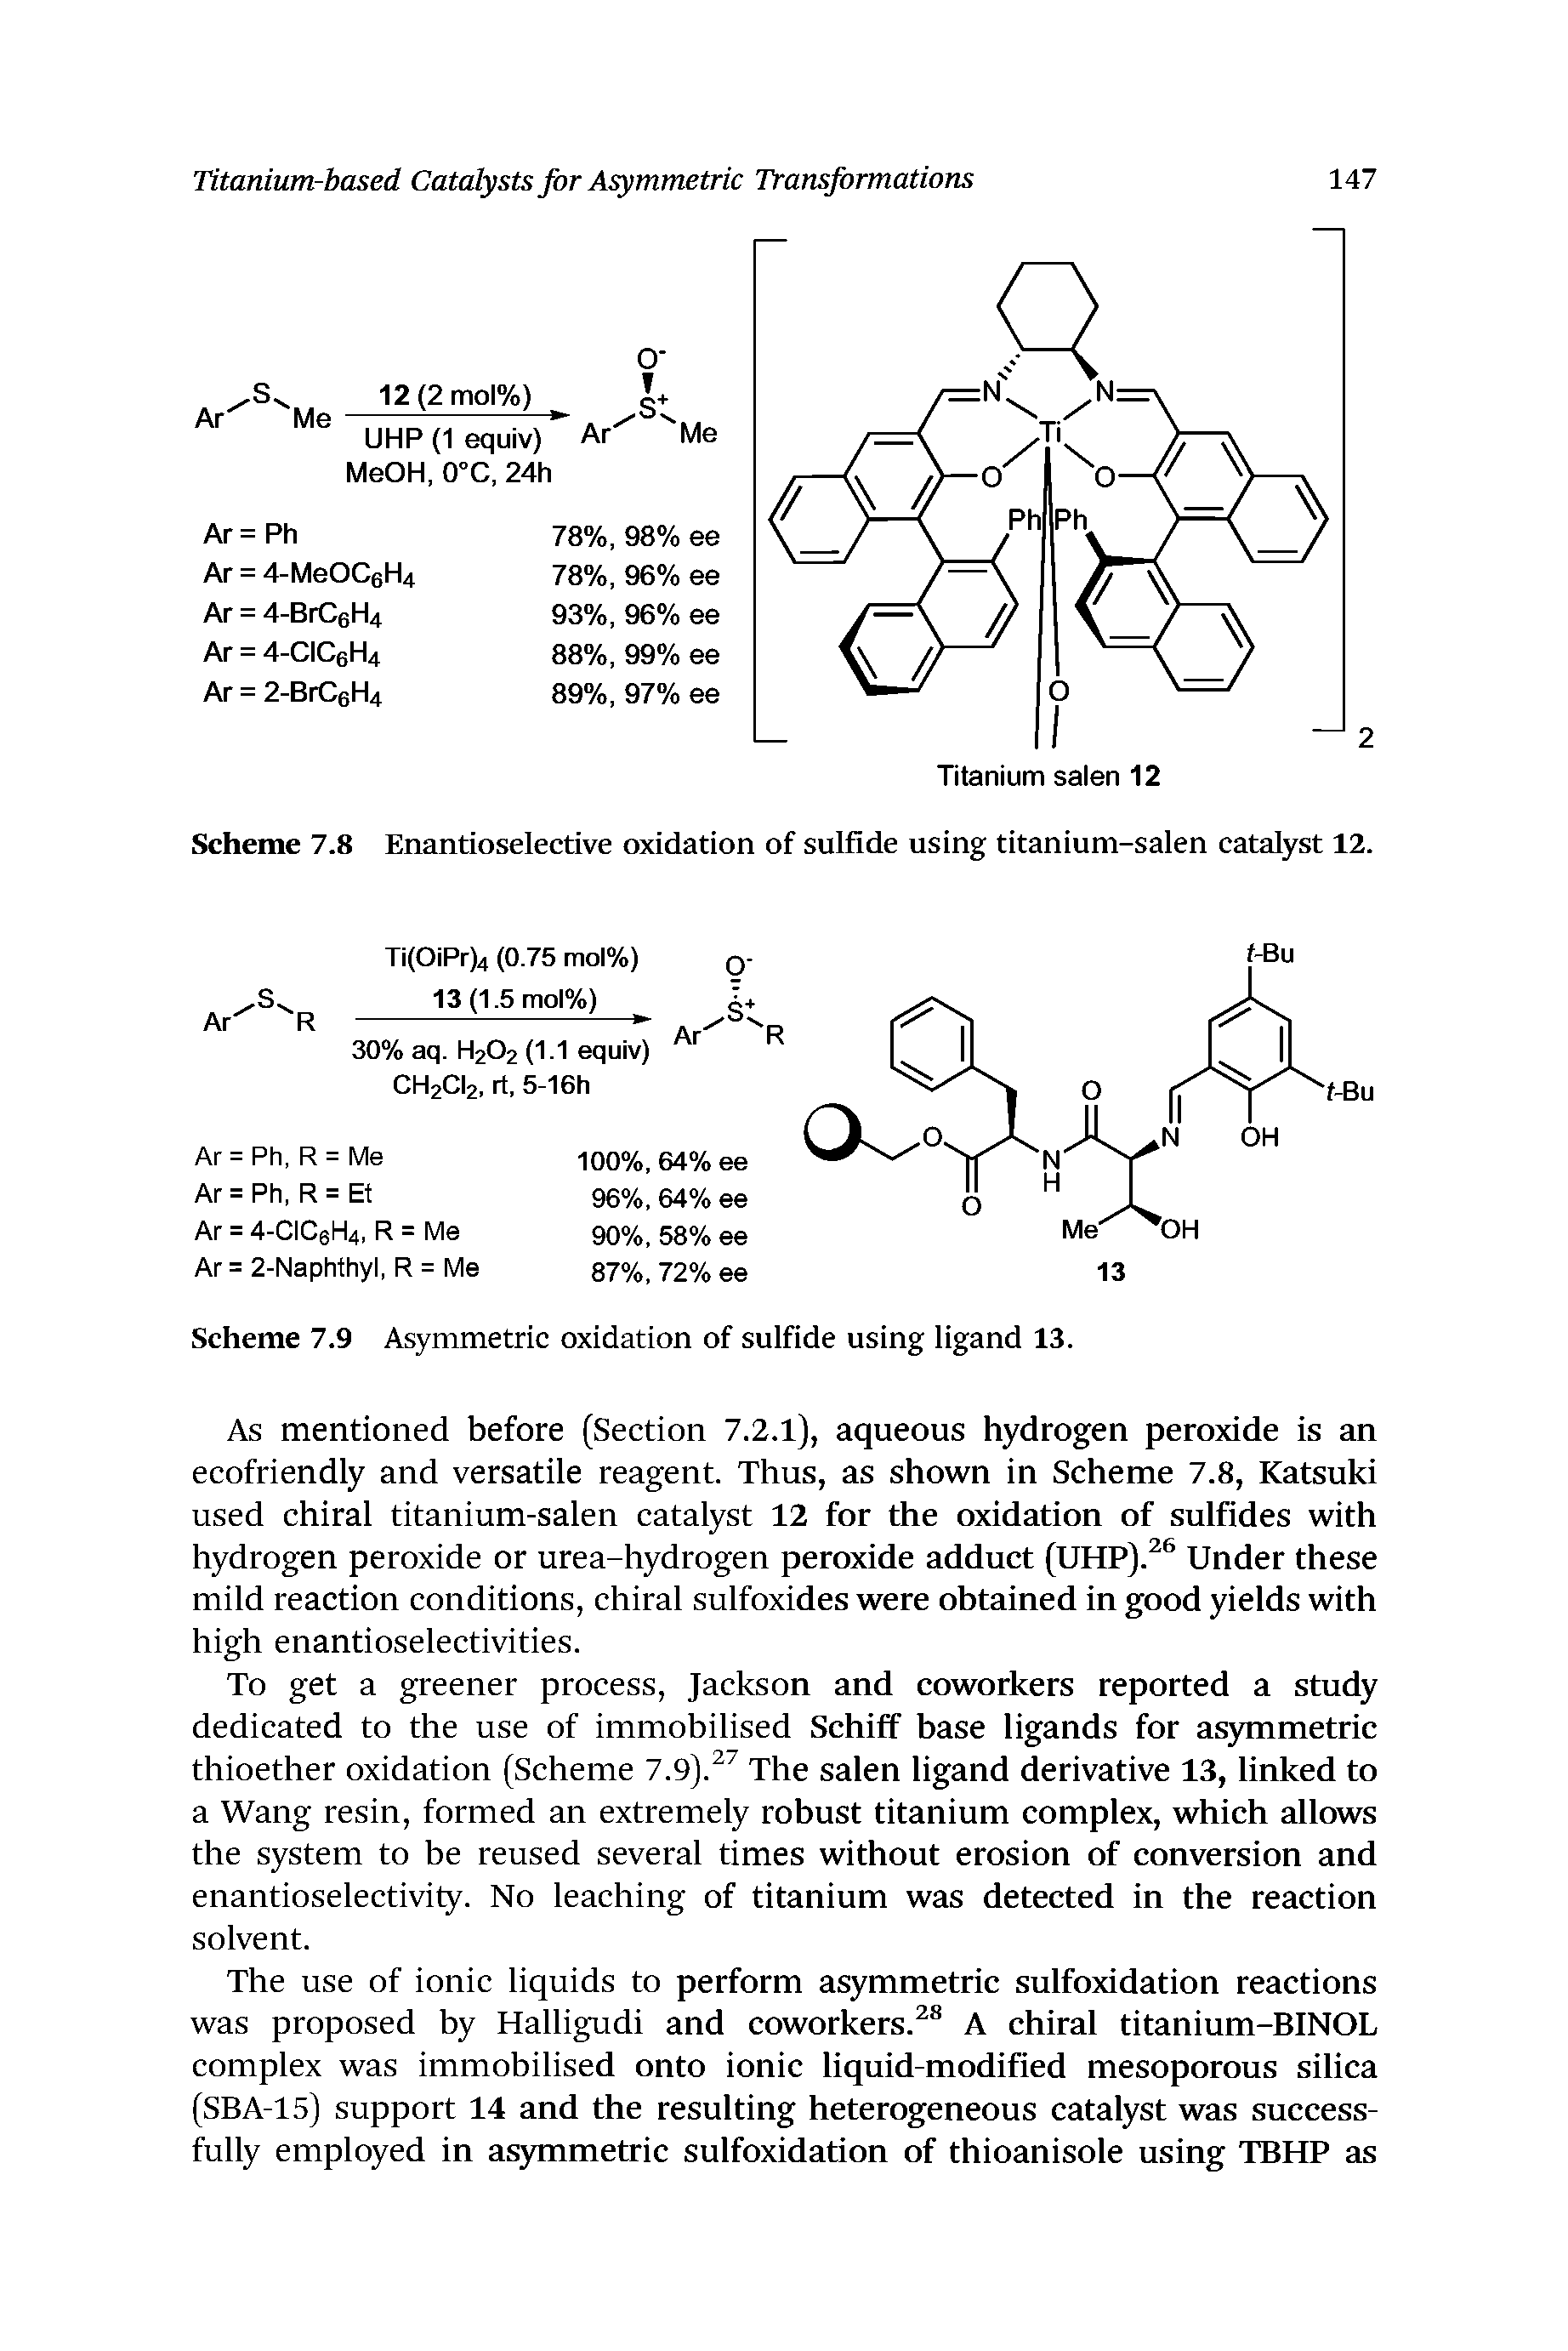 Scheme 7.8 Enantioselective oxidation of sulfide using titanium-salen catalyst 12.